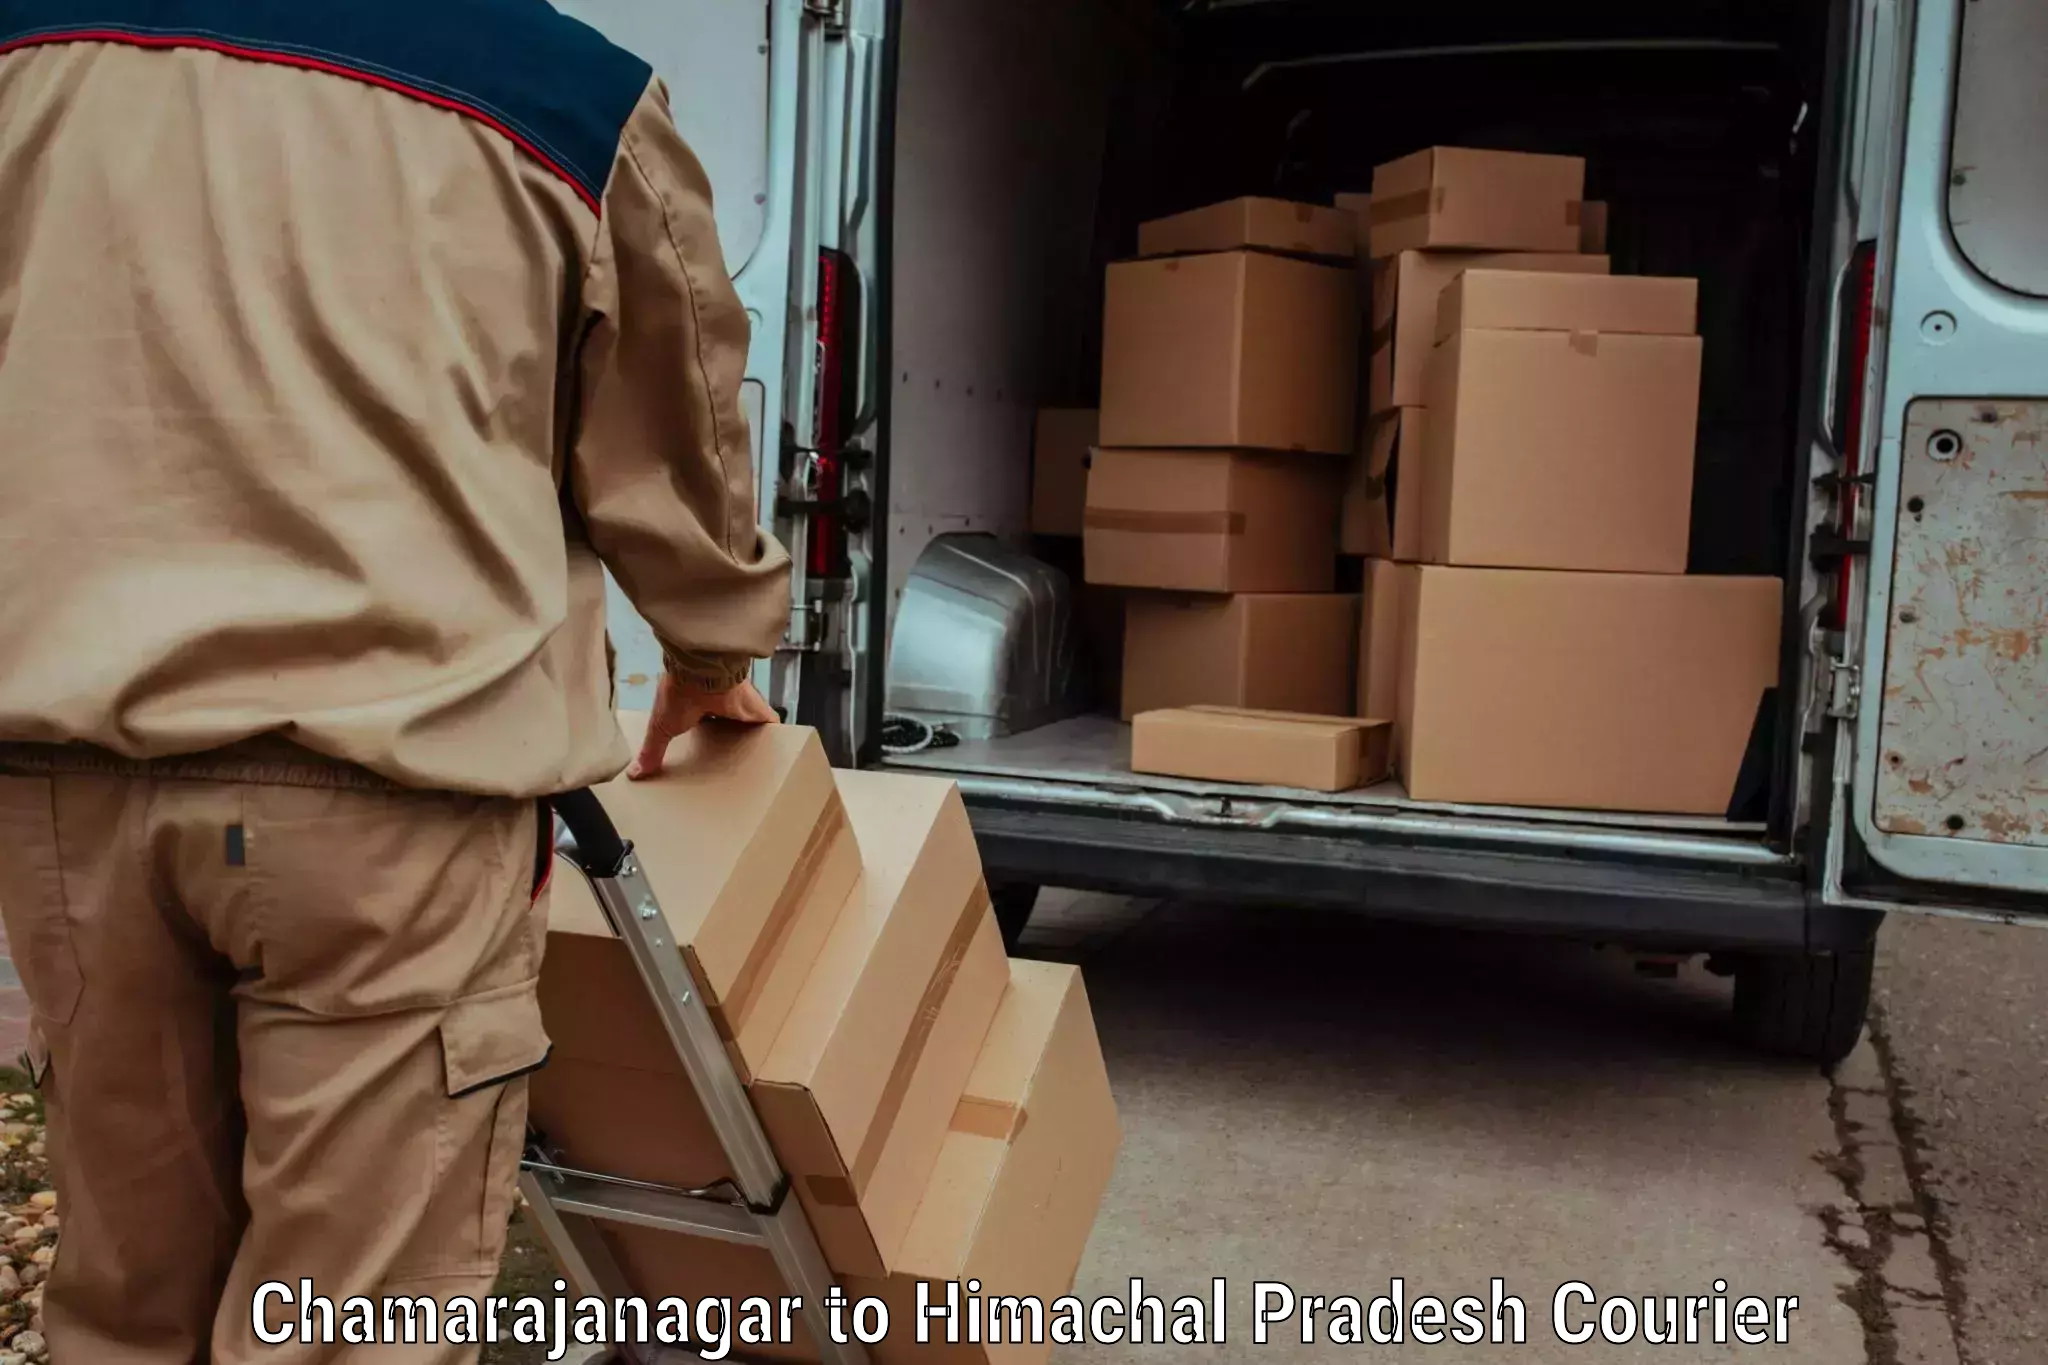 Reliable delivery network Chamarajanagar to Himachal Pradesh